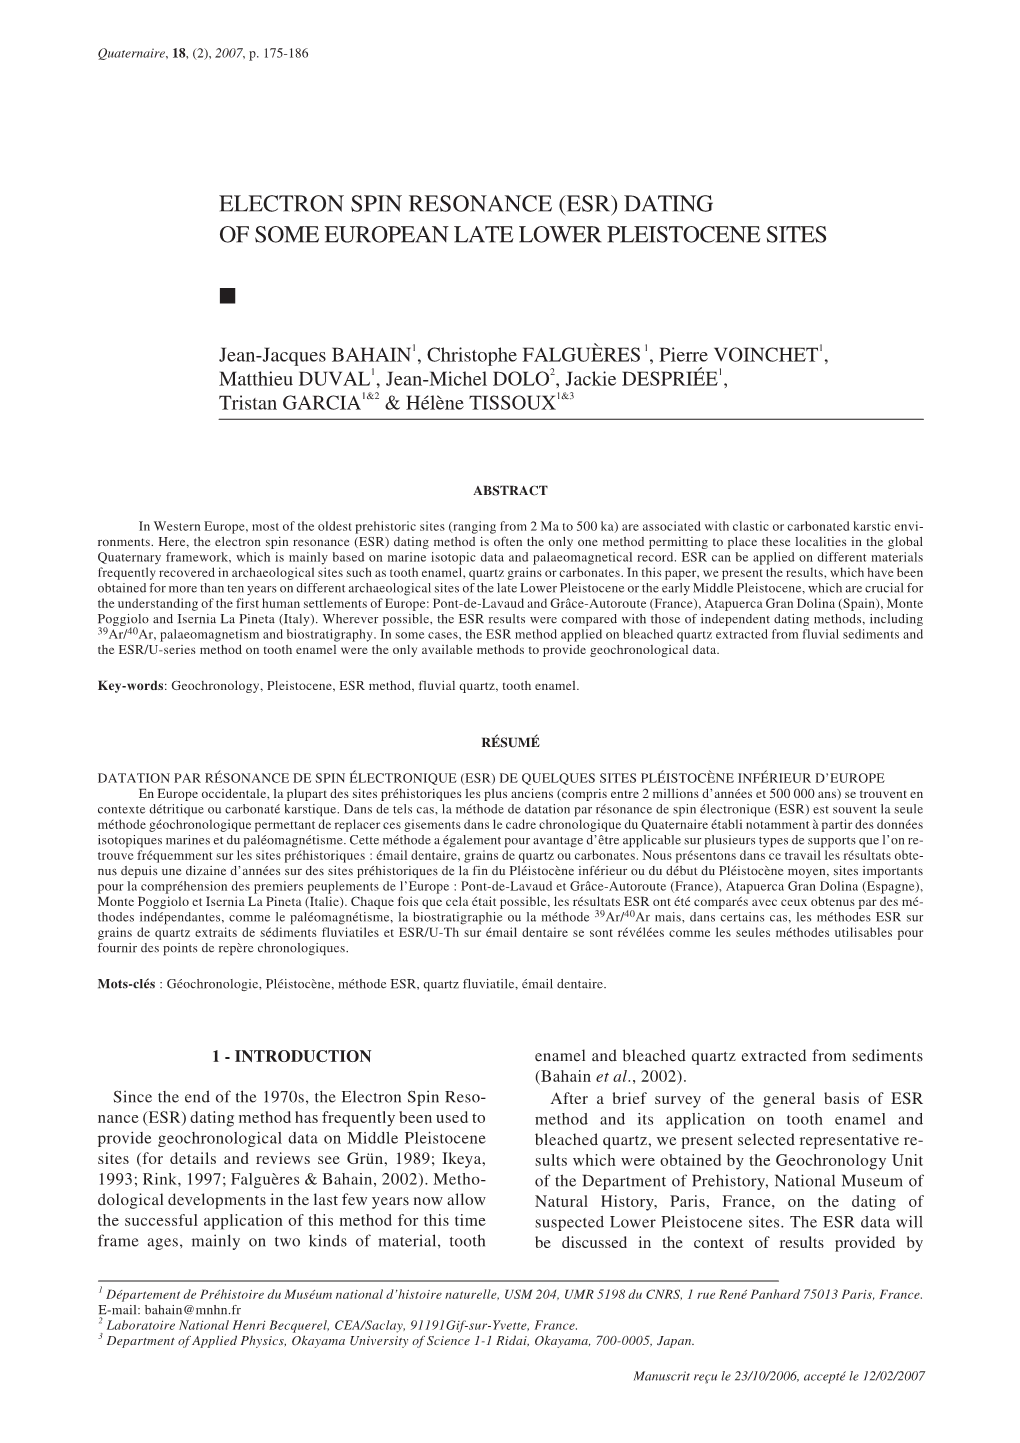 Electron Spin Resonance (Esr) Dating of Some European Late Lower Pleistocene Sites ⅲ